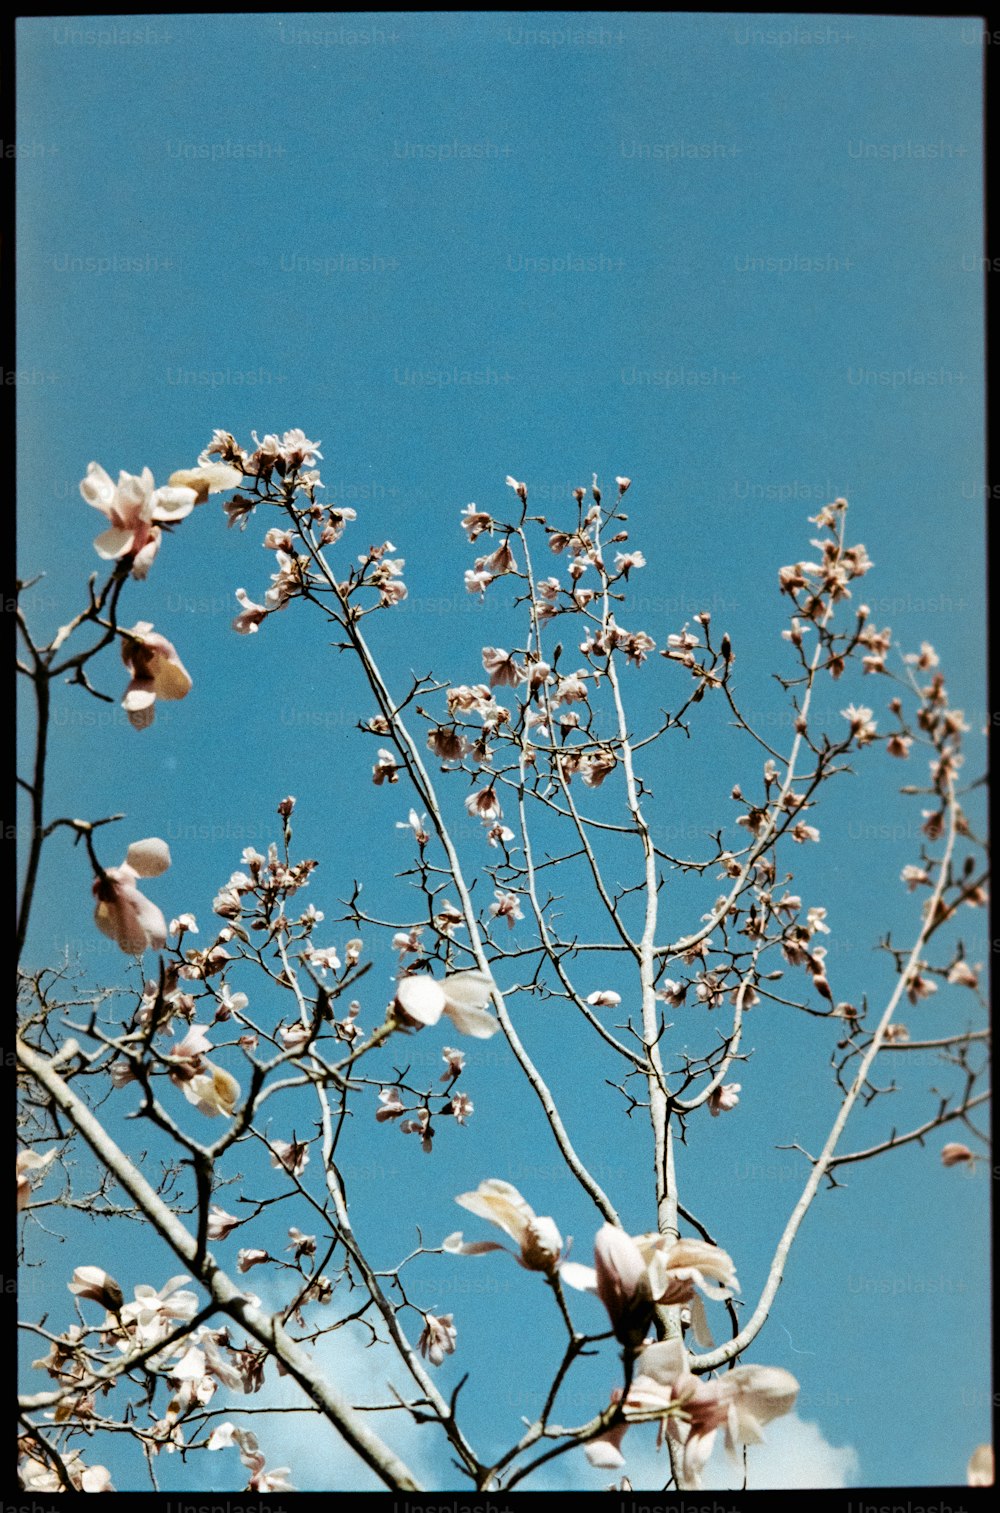 las ramas de un árbol con flores blancas contra un cielo azul